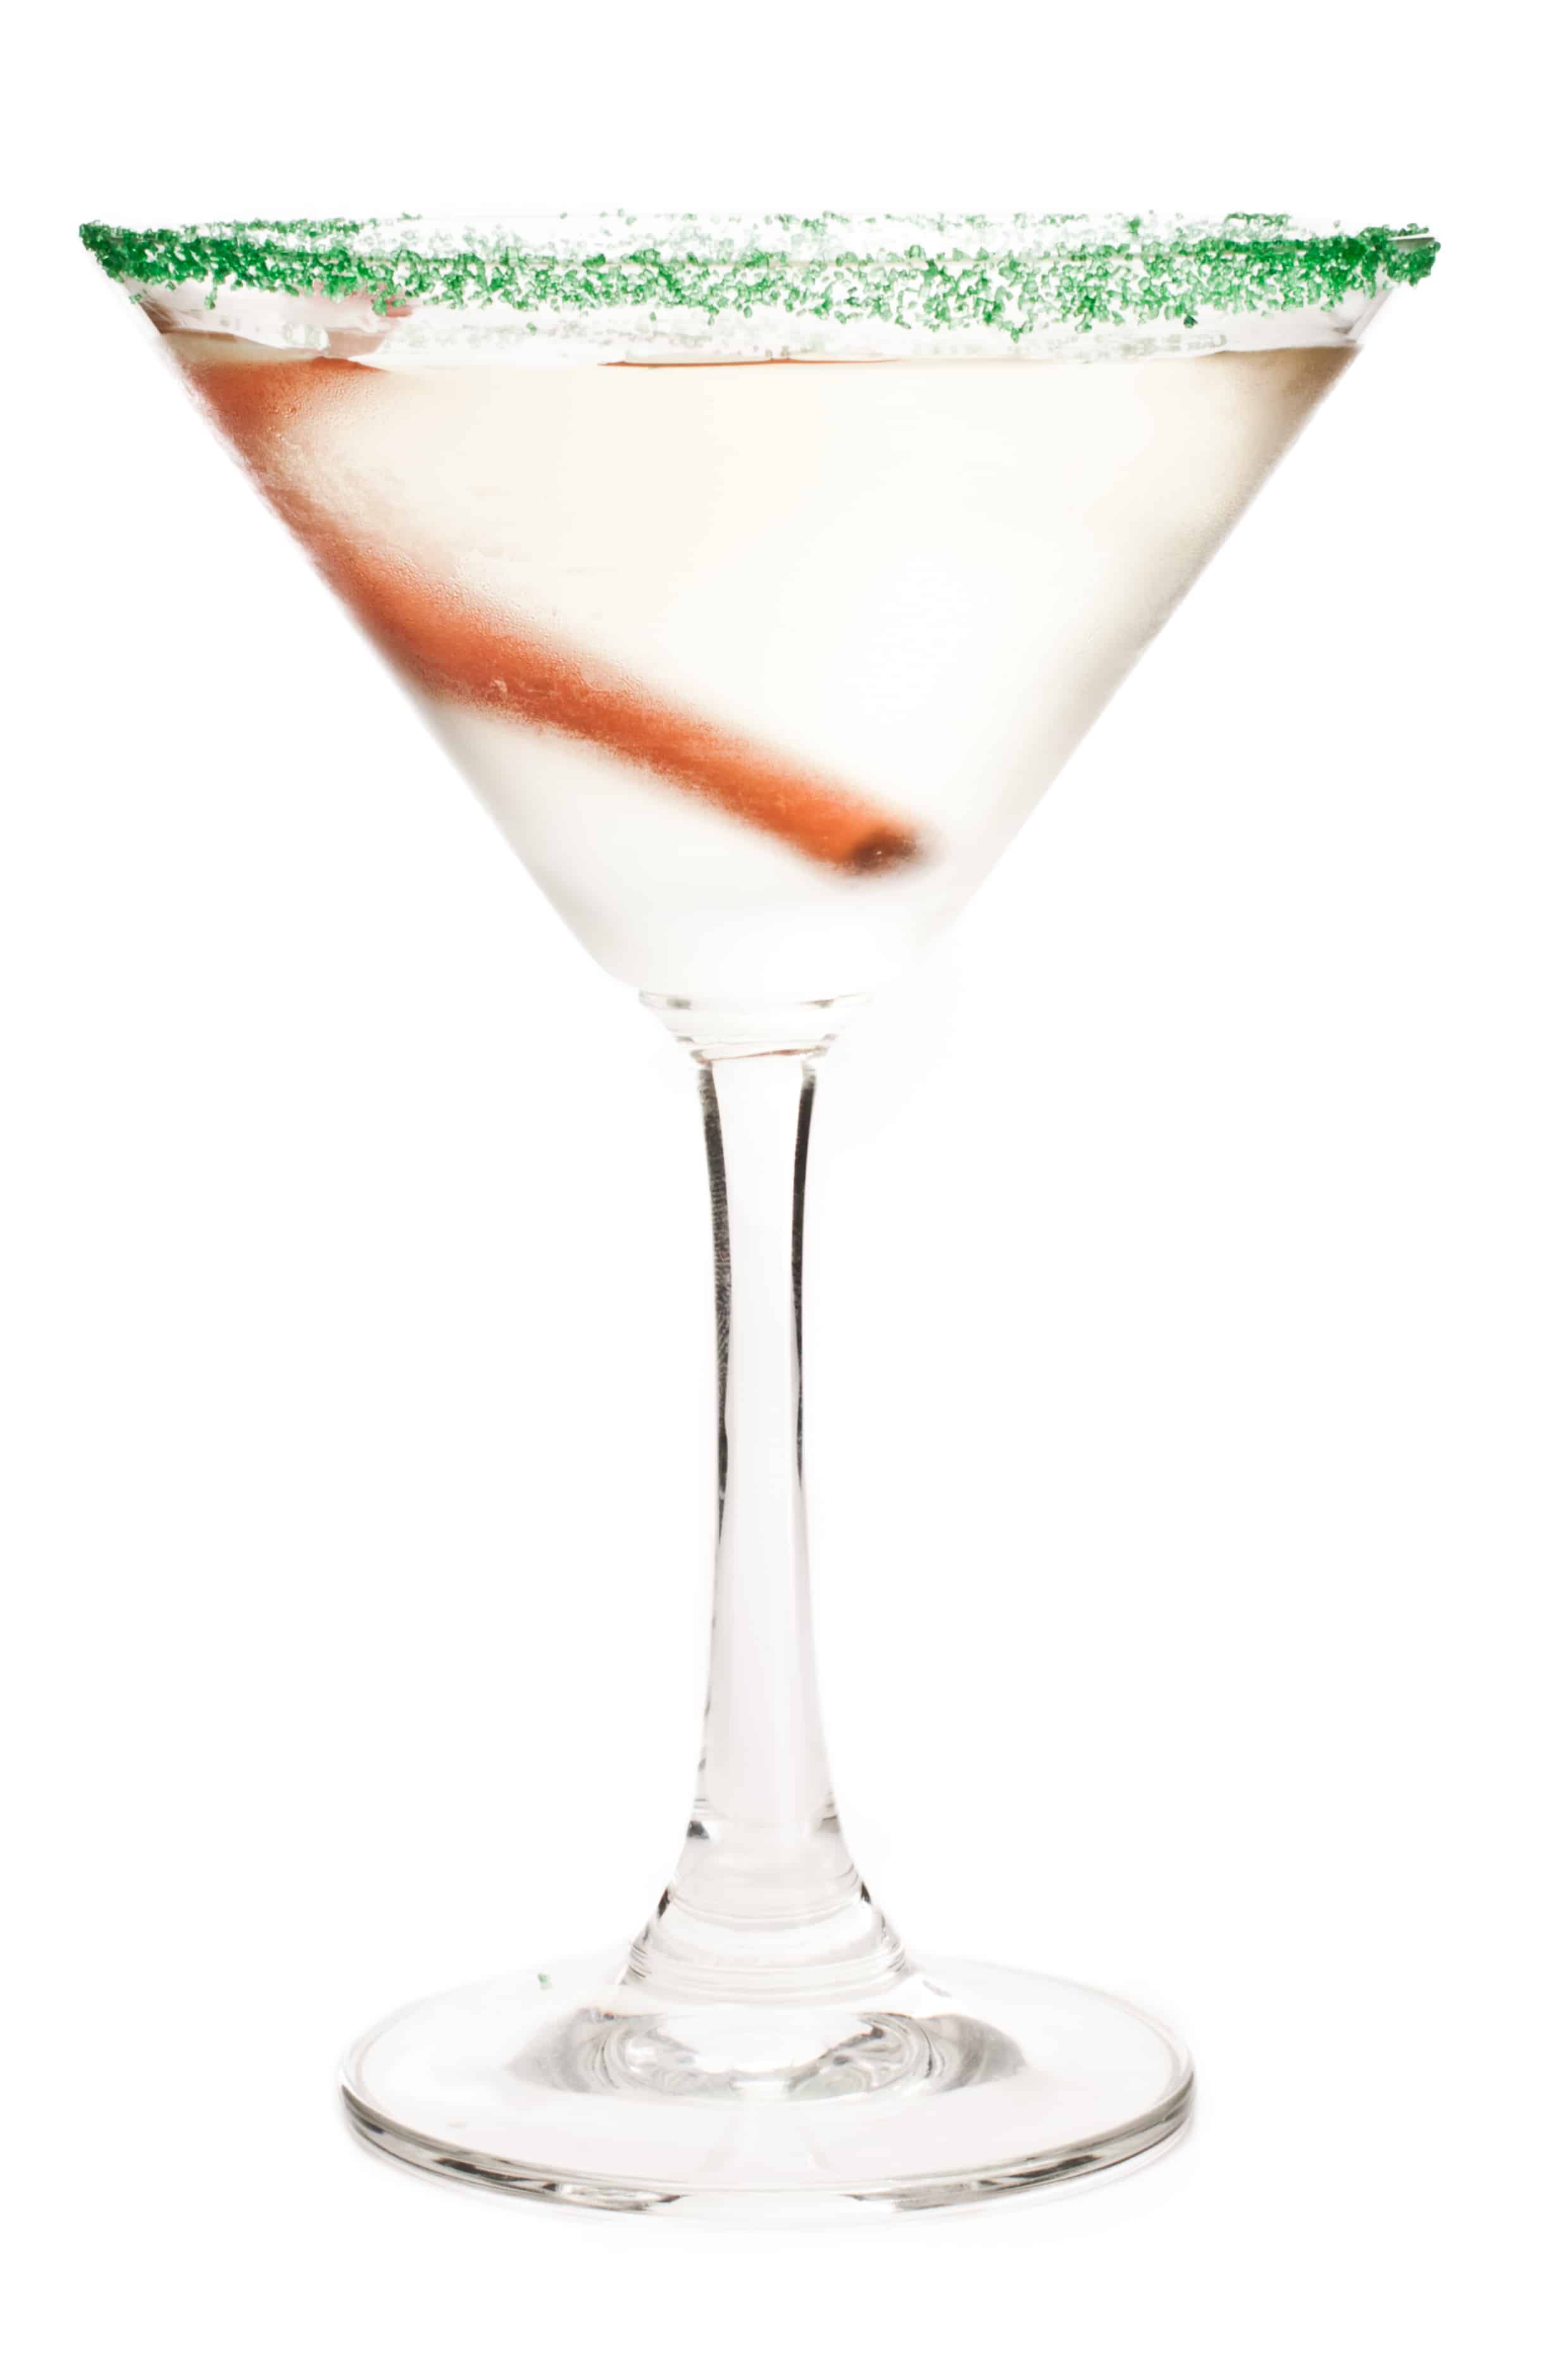 Shamrock Martini